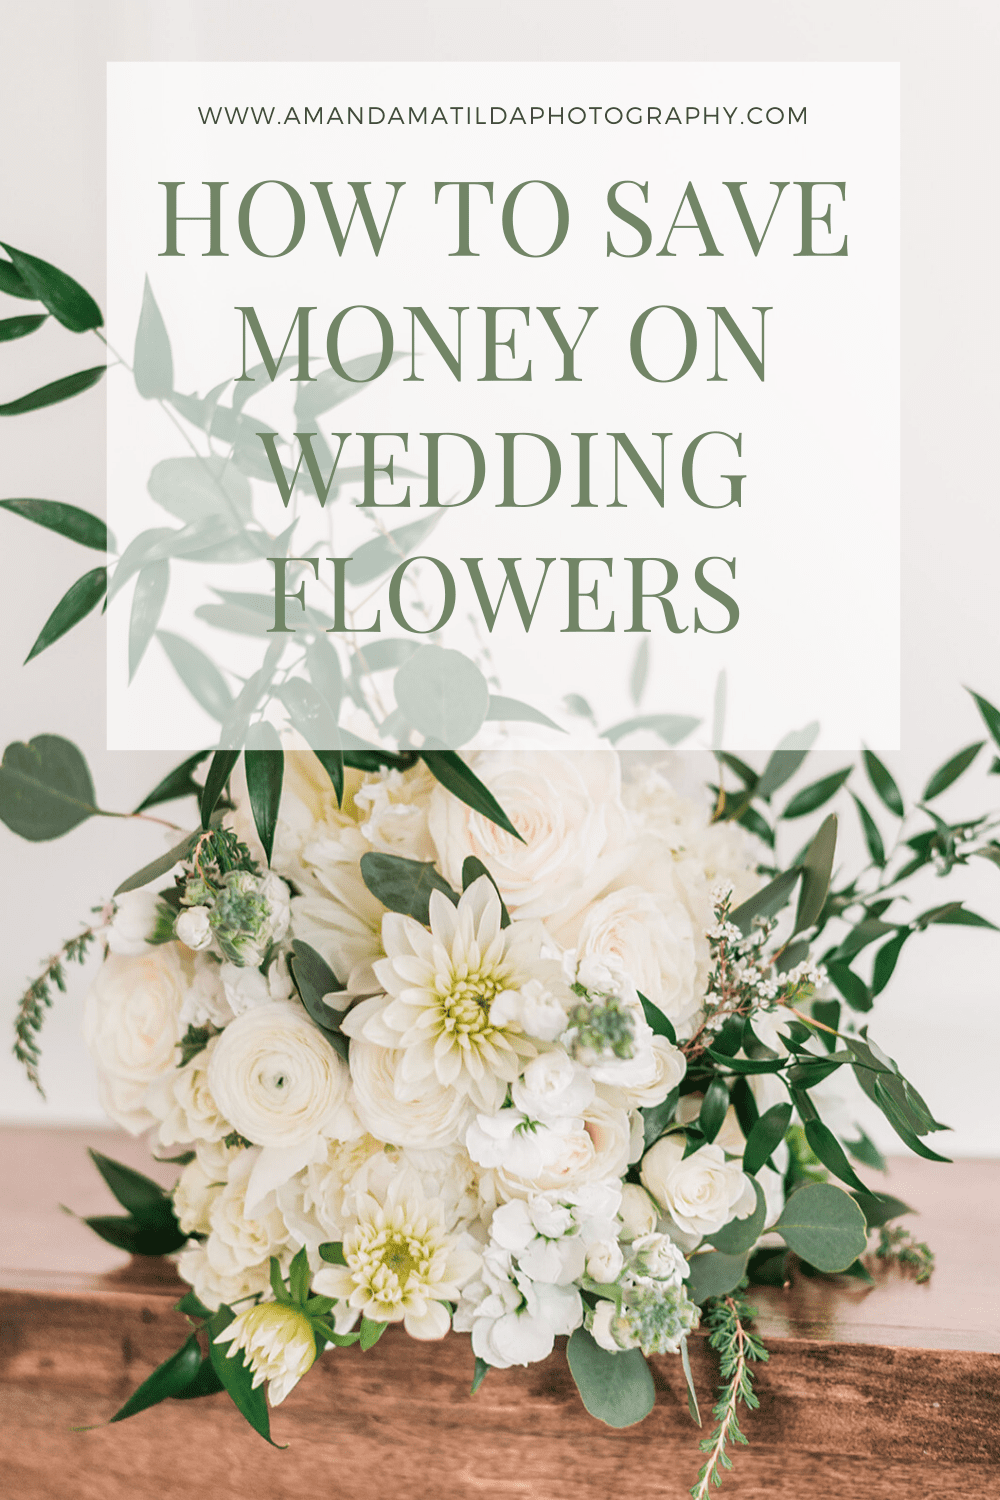 How to Save Money on Wedding Flowers | Amanda Matilda Photography and Country Elegance Florist